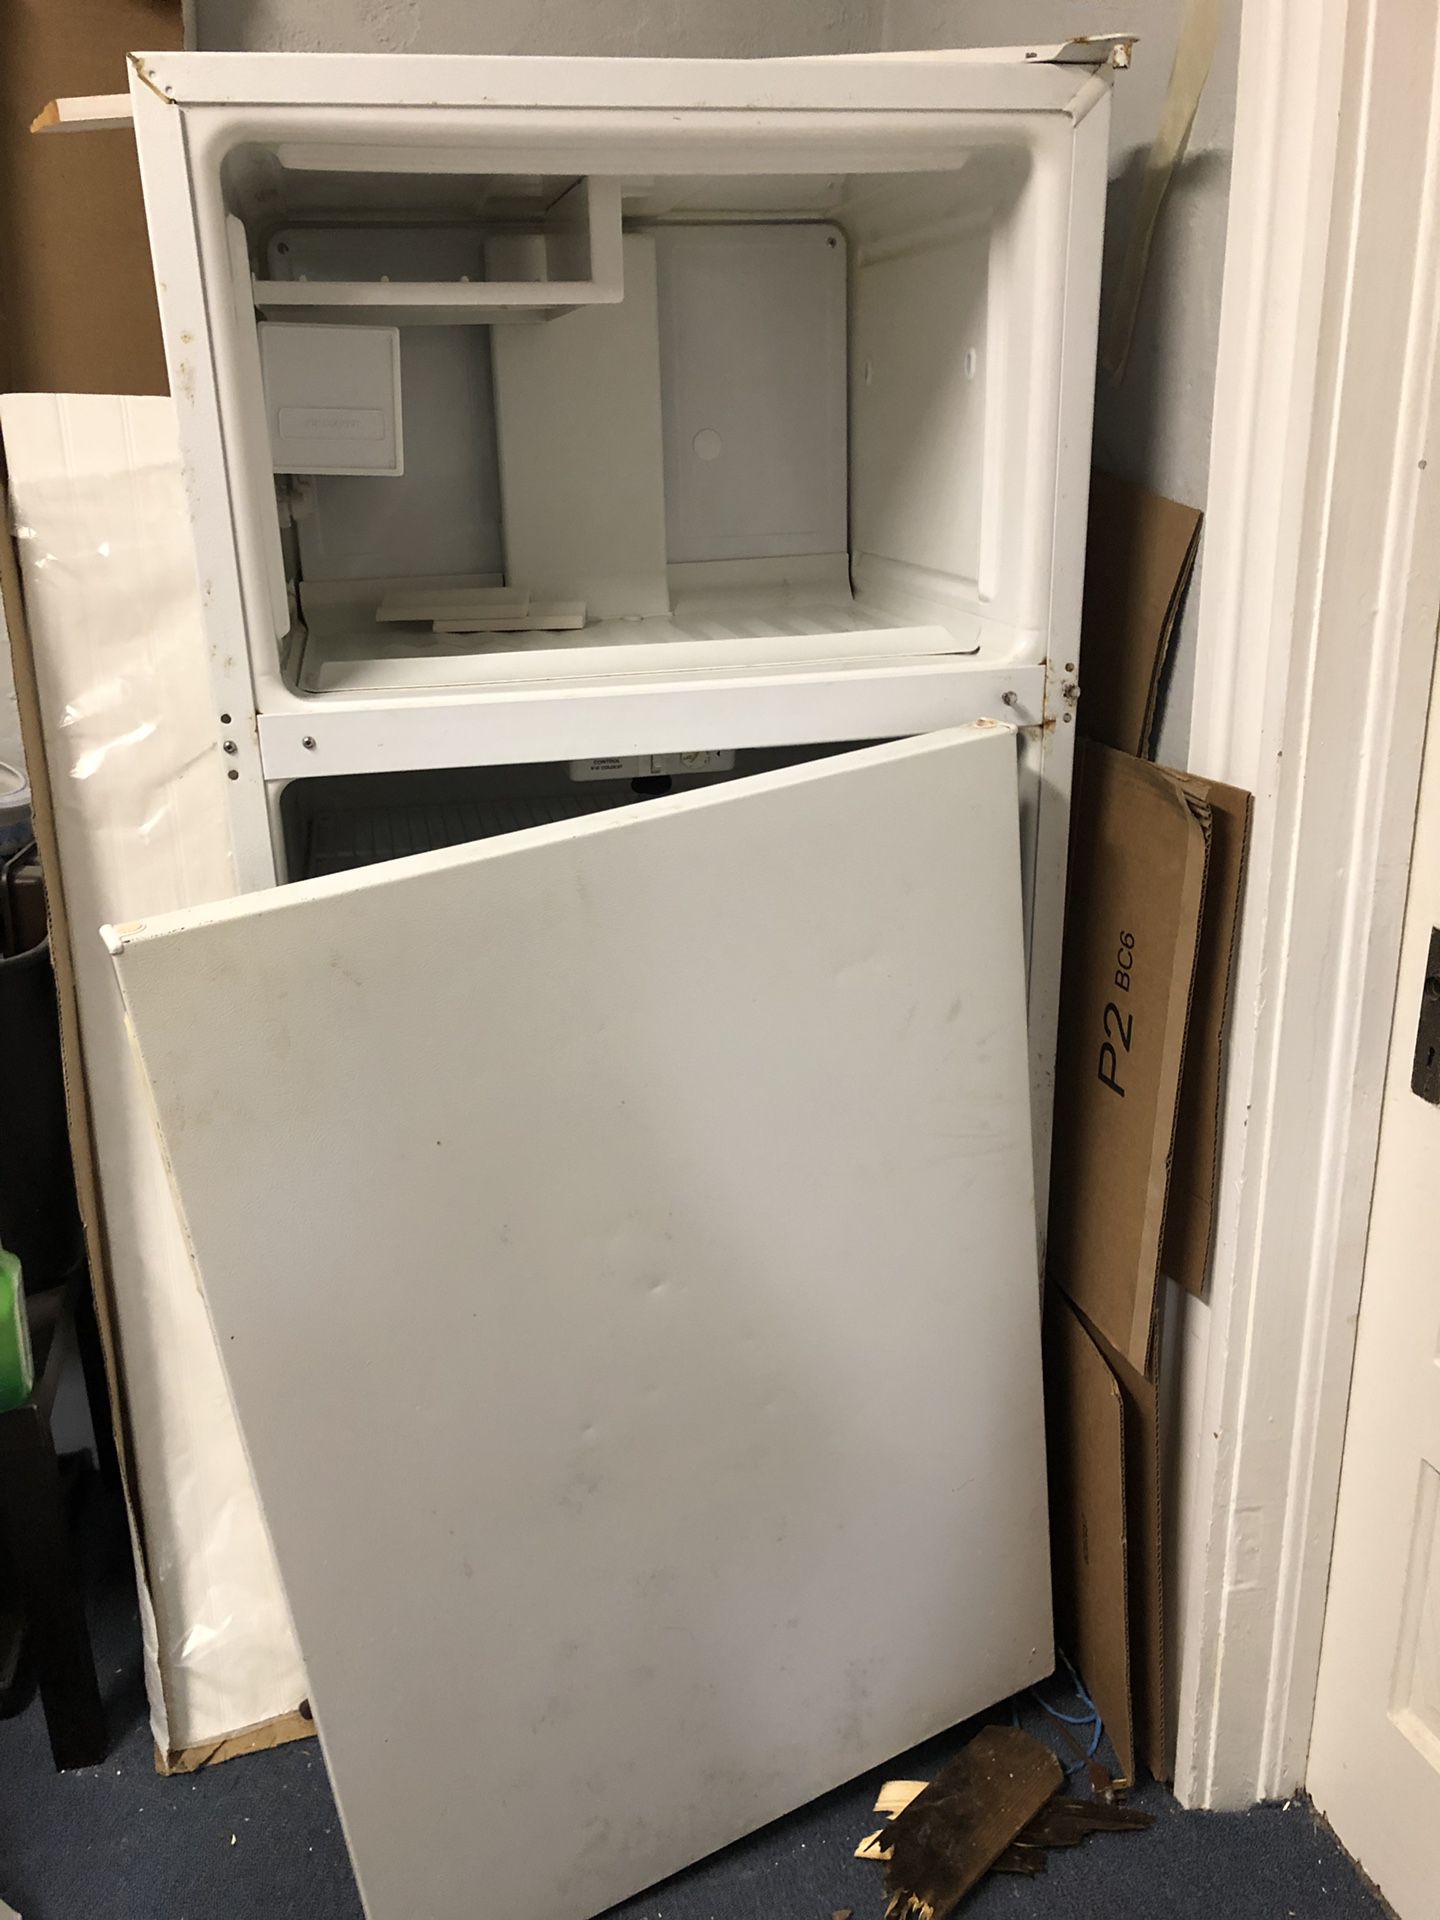 Efficiency size refrigerator and freezer